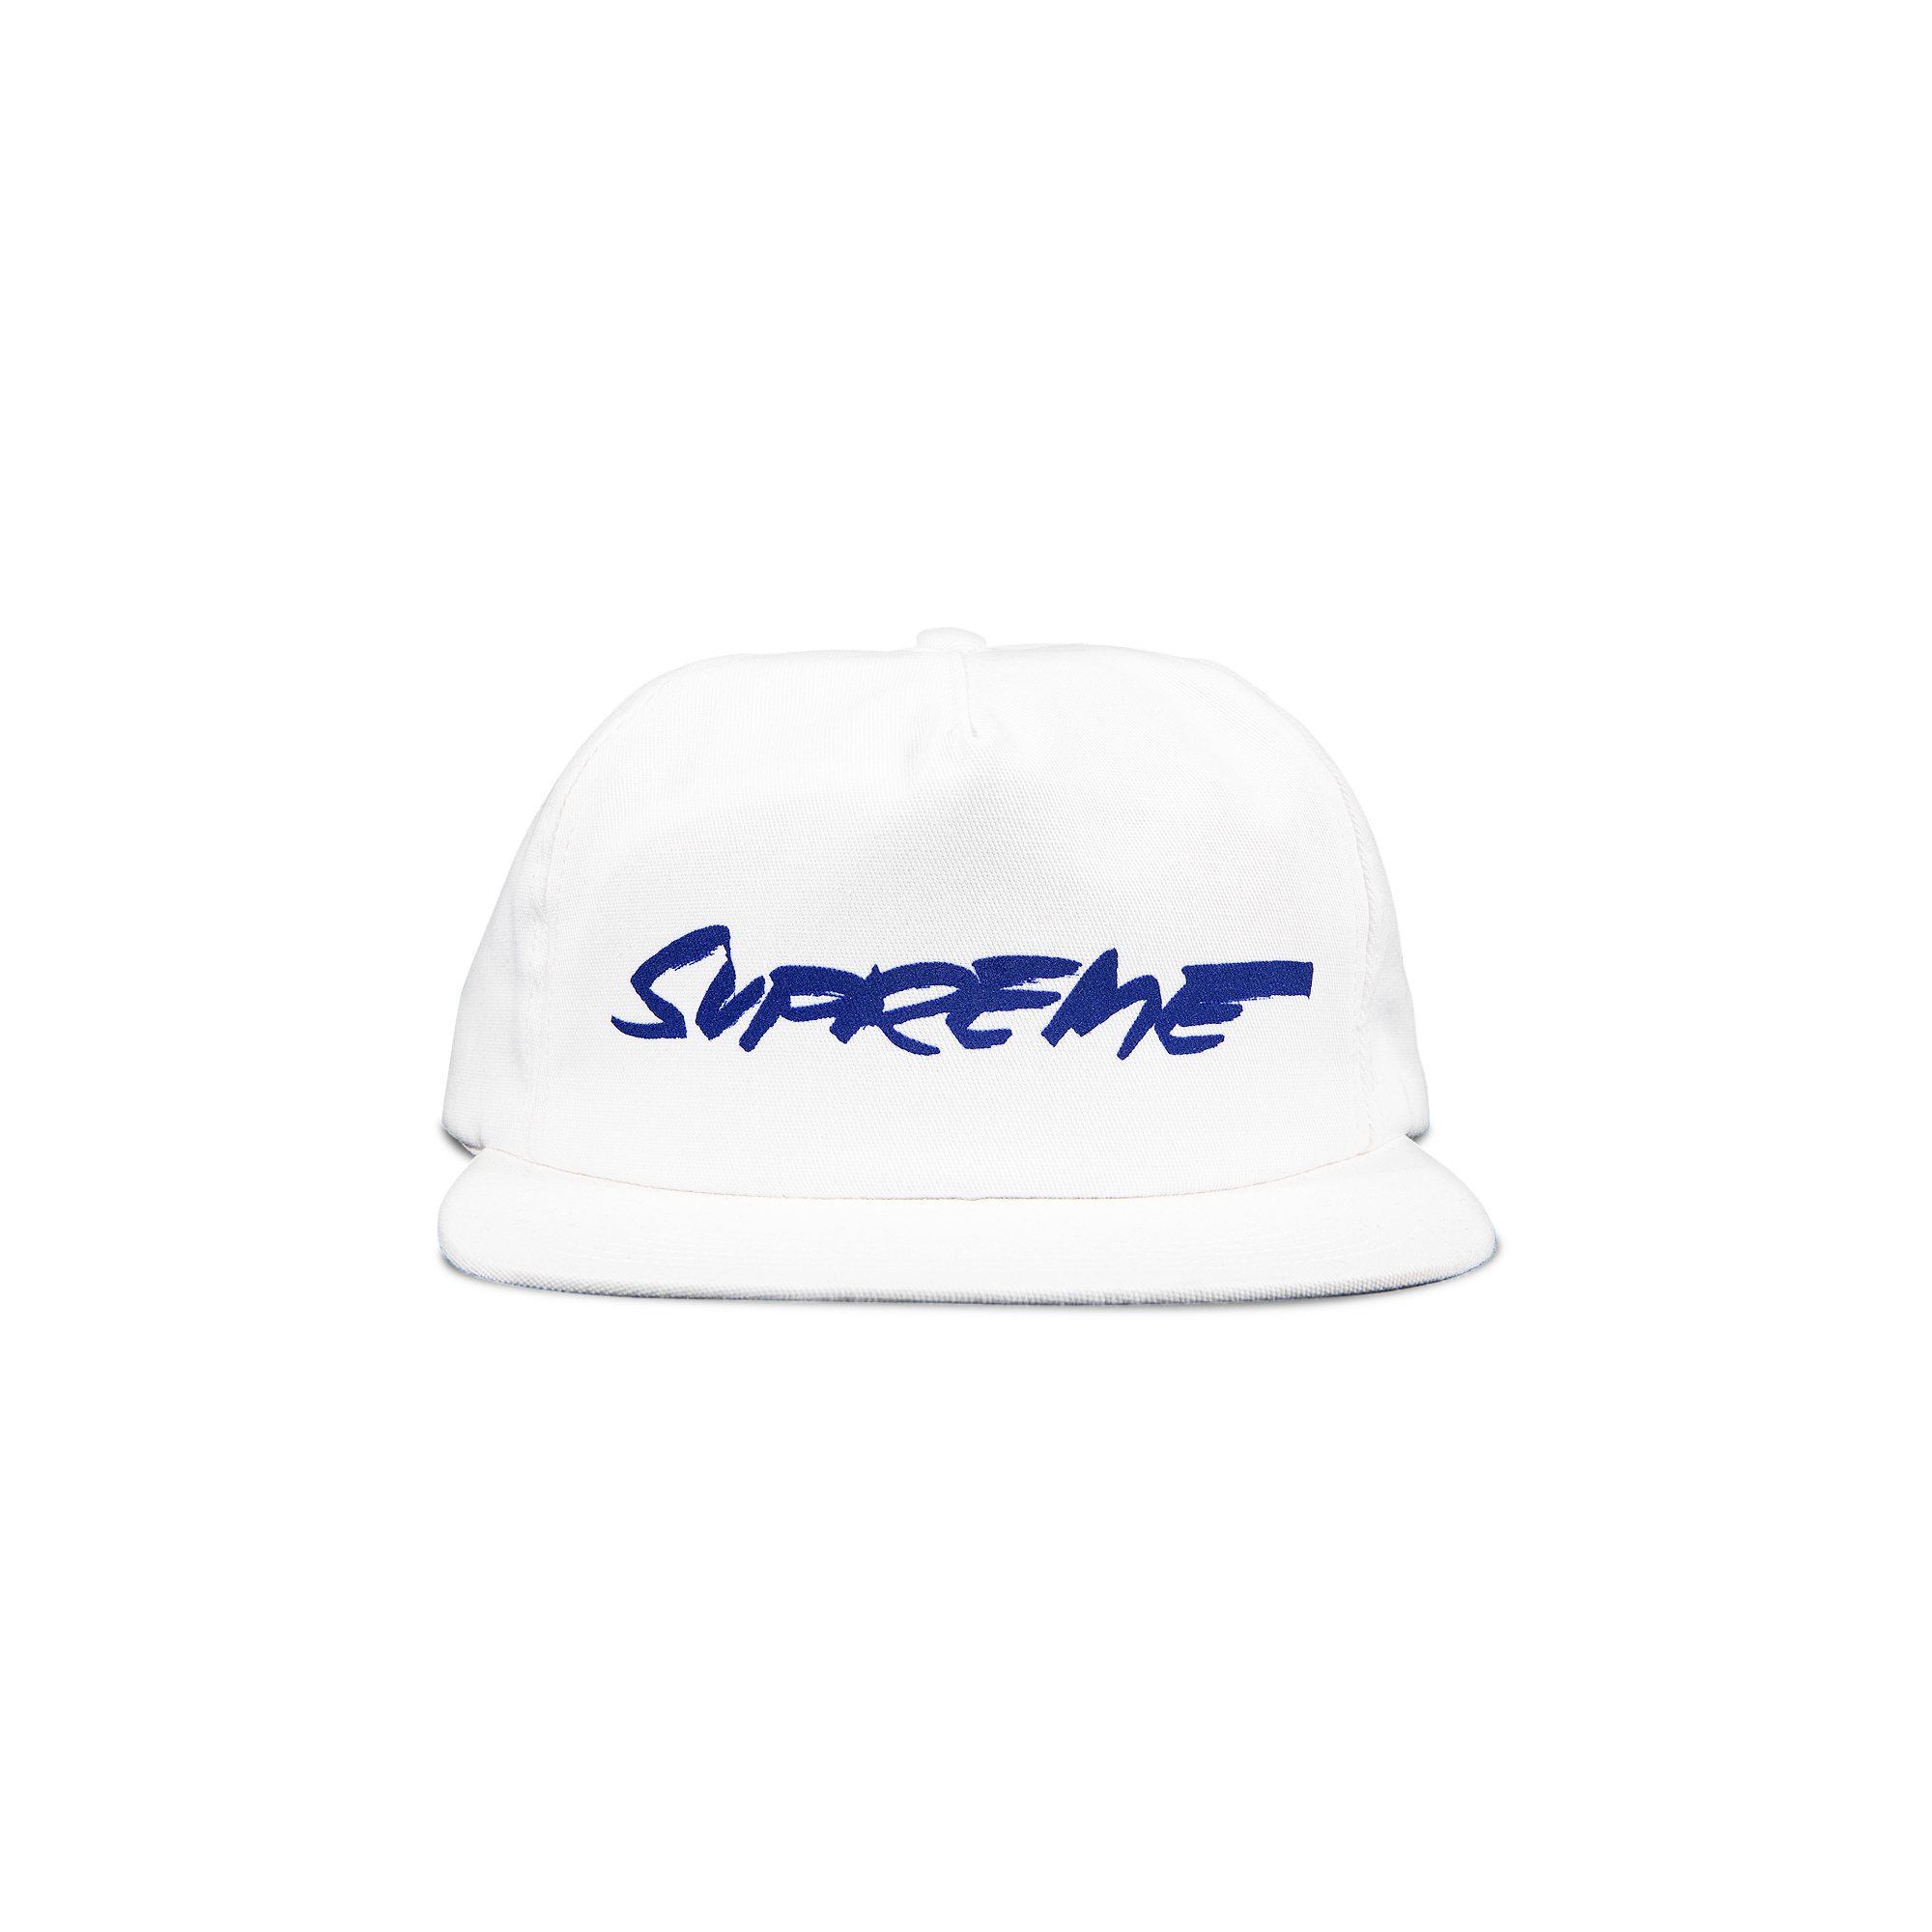 Пятипанельный логотип Supreme Futura, белый цвет пятипанельный логотип supreme bones зеленый